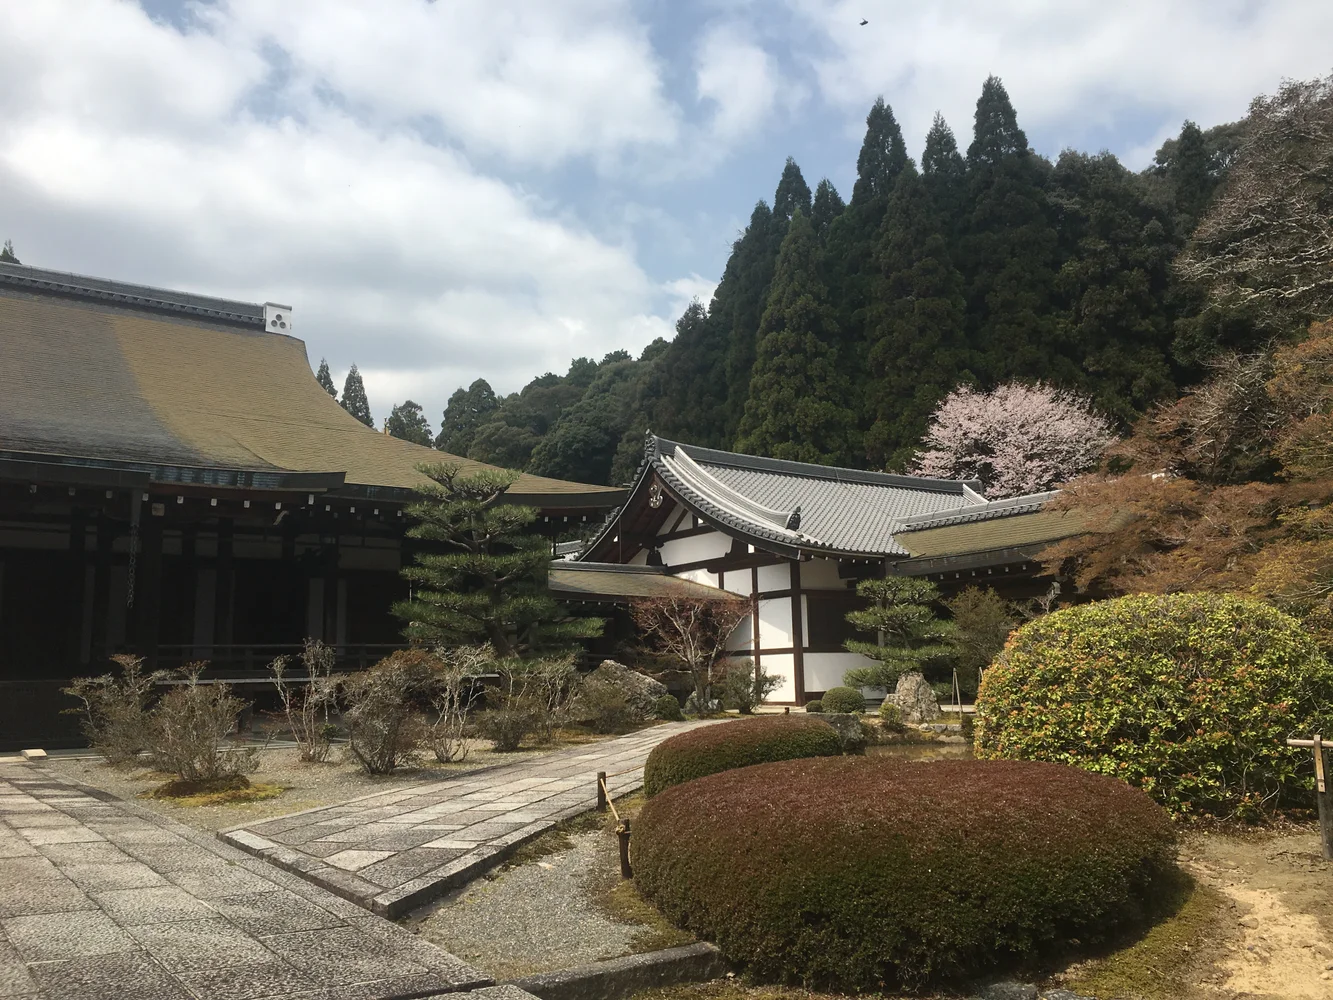 Buildings and greenery at Saihō-ji (Moss Temple) in Kyoto